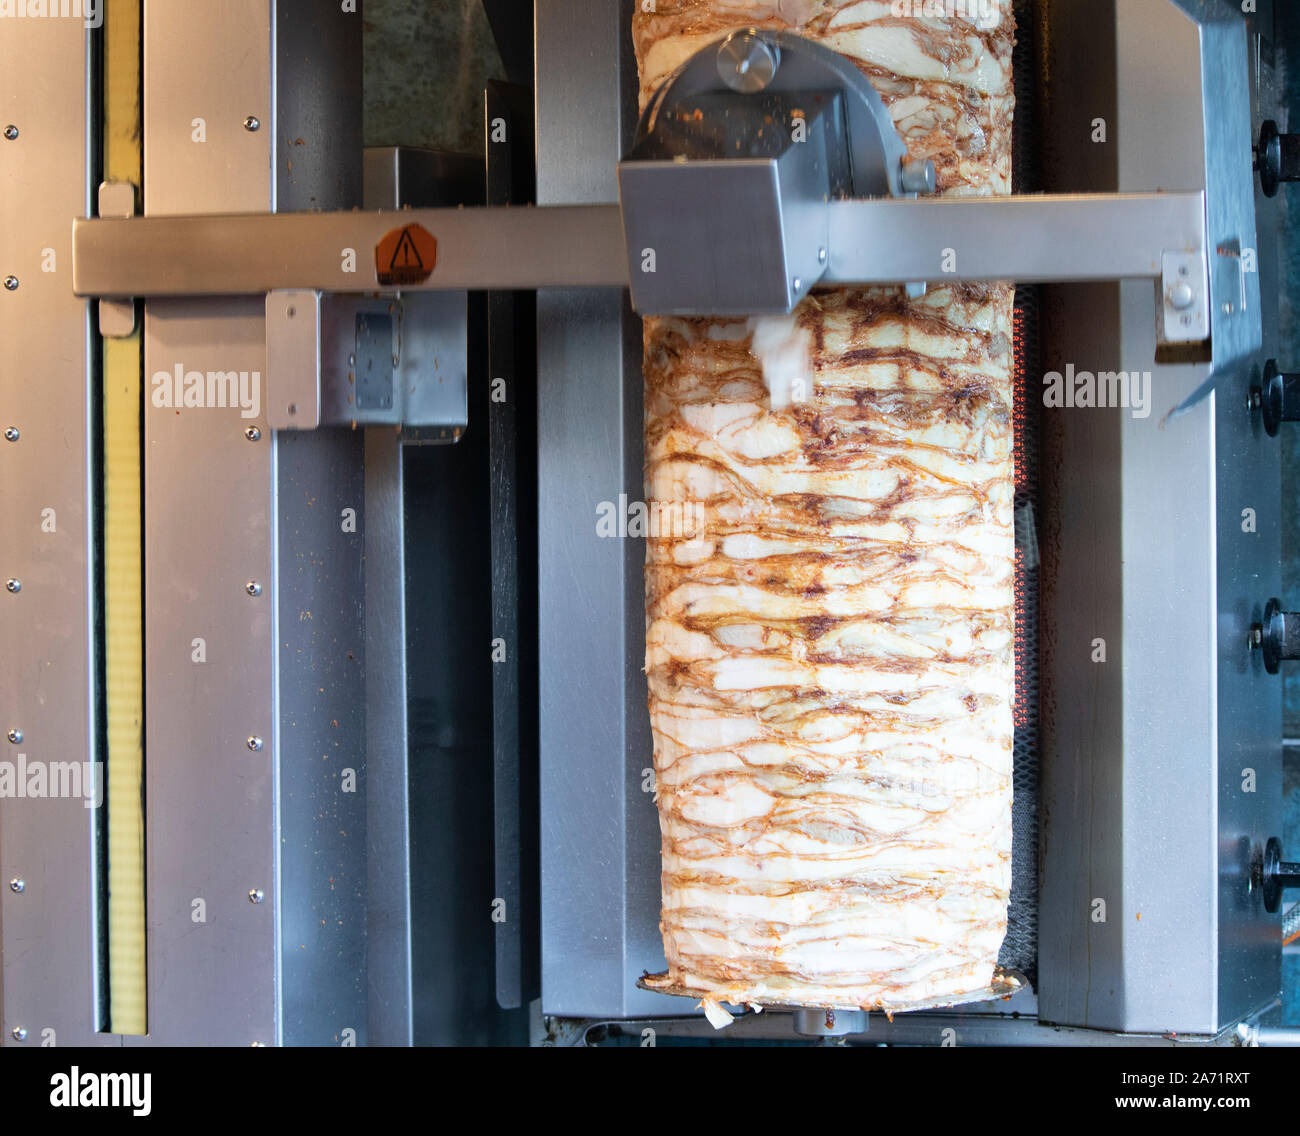 Döner Kebab macchina e impostare close-up Foto stock - Alamy